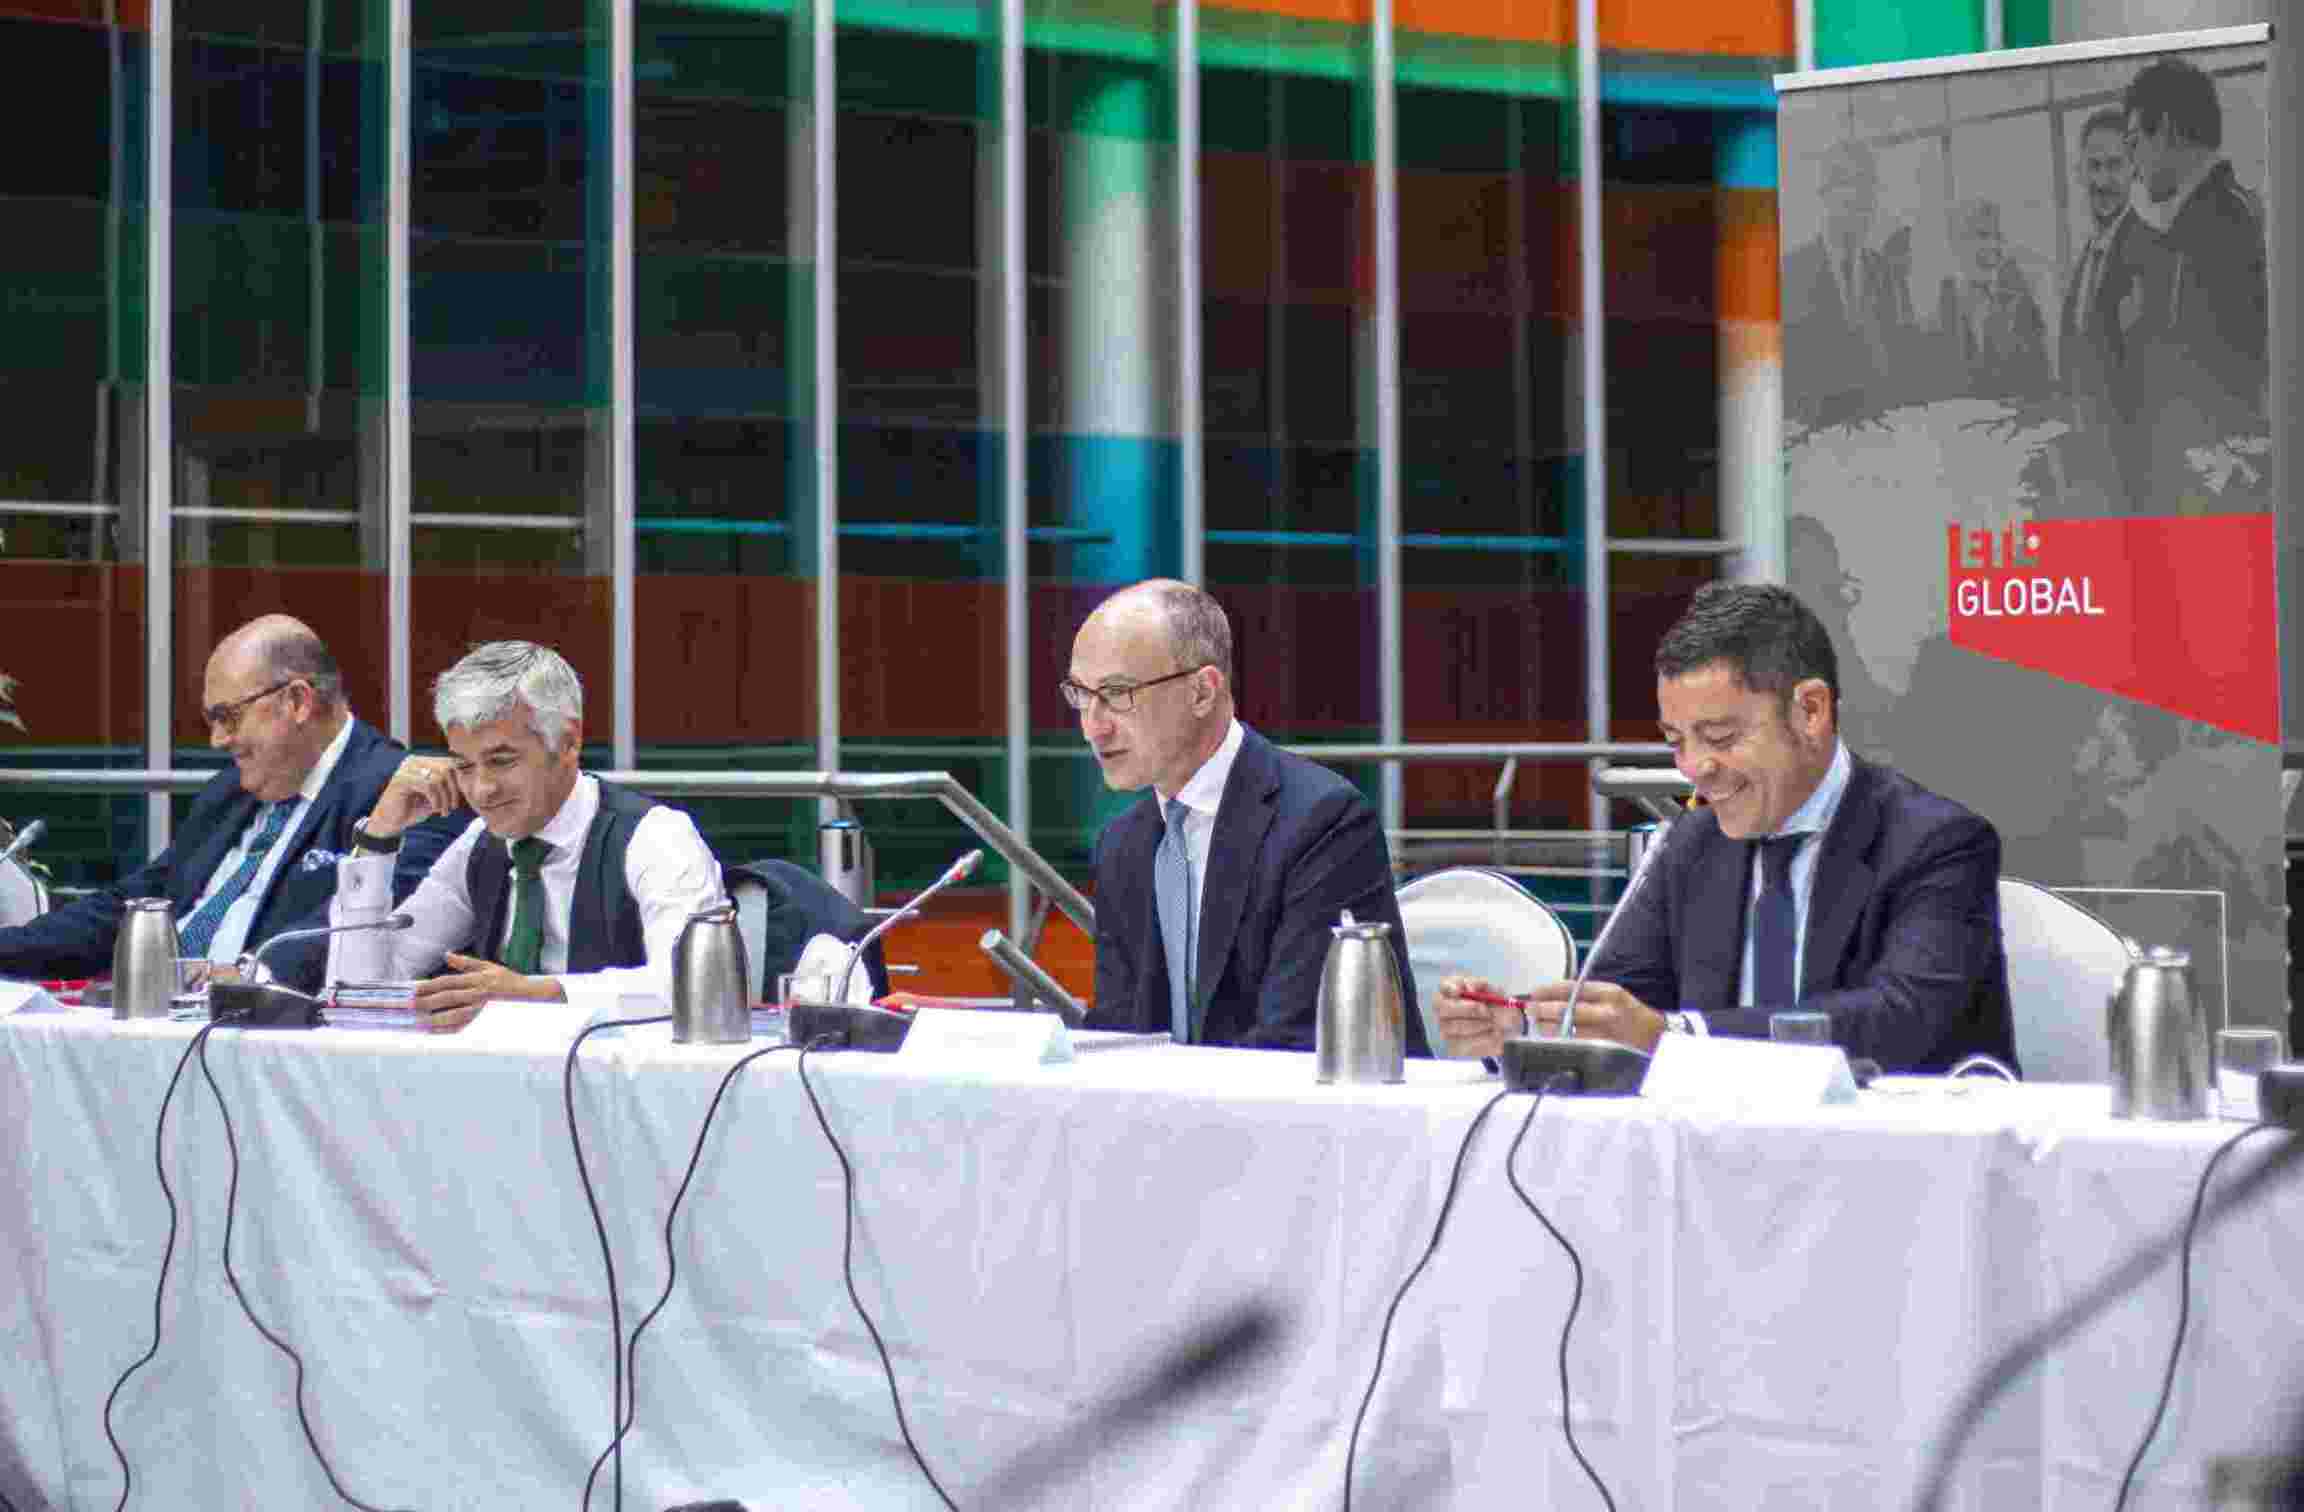 ETL GLOBAL´s CEO Dr. Christian Gorny and Master Partner Juan Bermúdez Clavería at the National Congress with BK Consulting´s Managing Director Raúl Barambones Gibello.